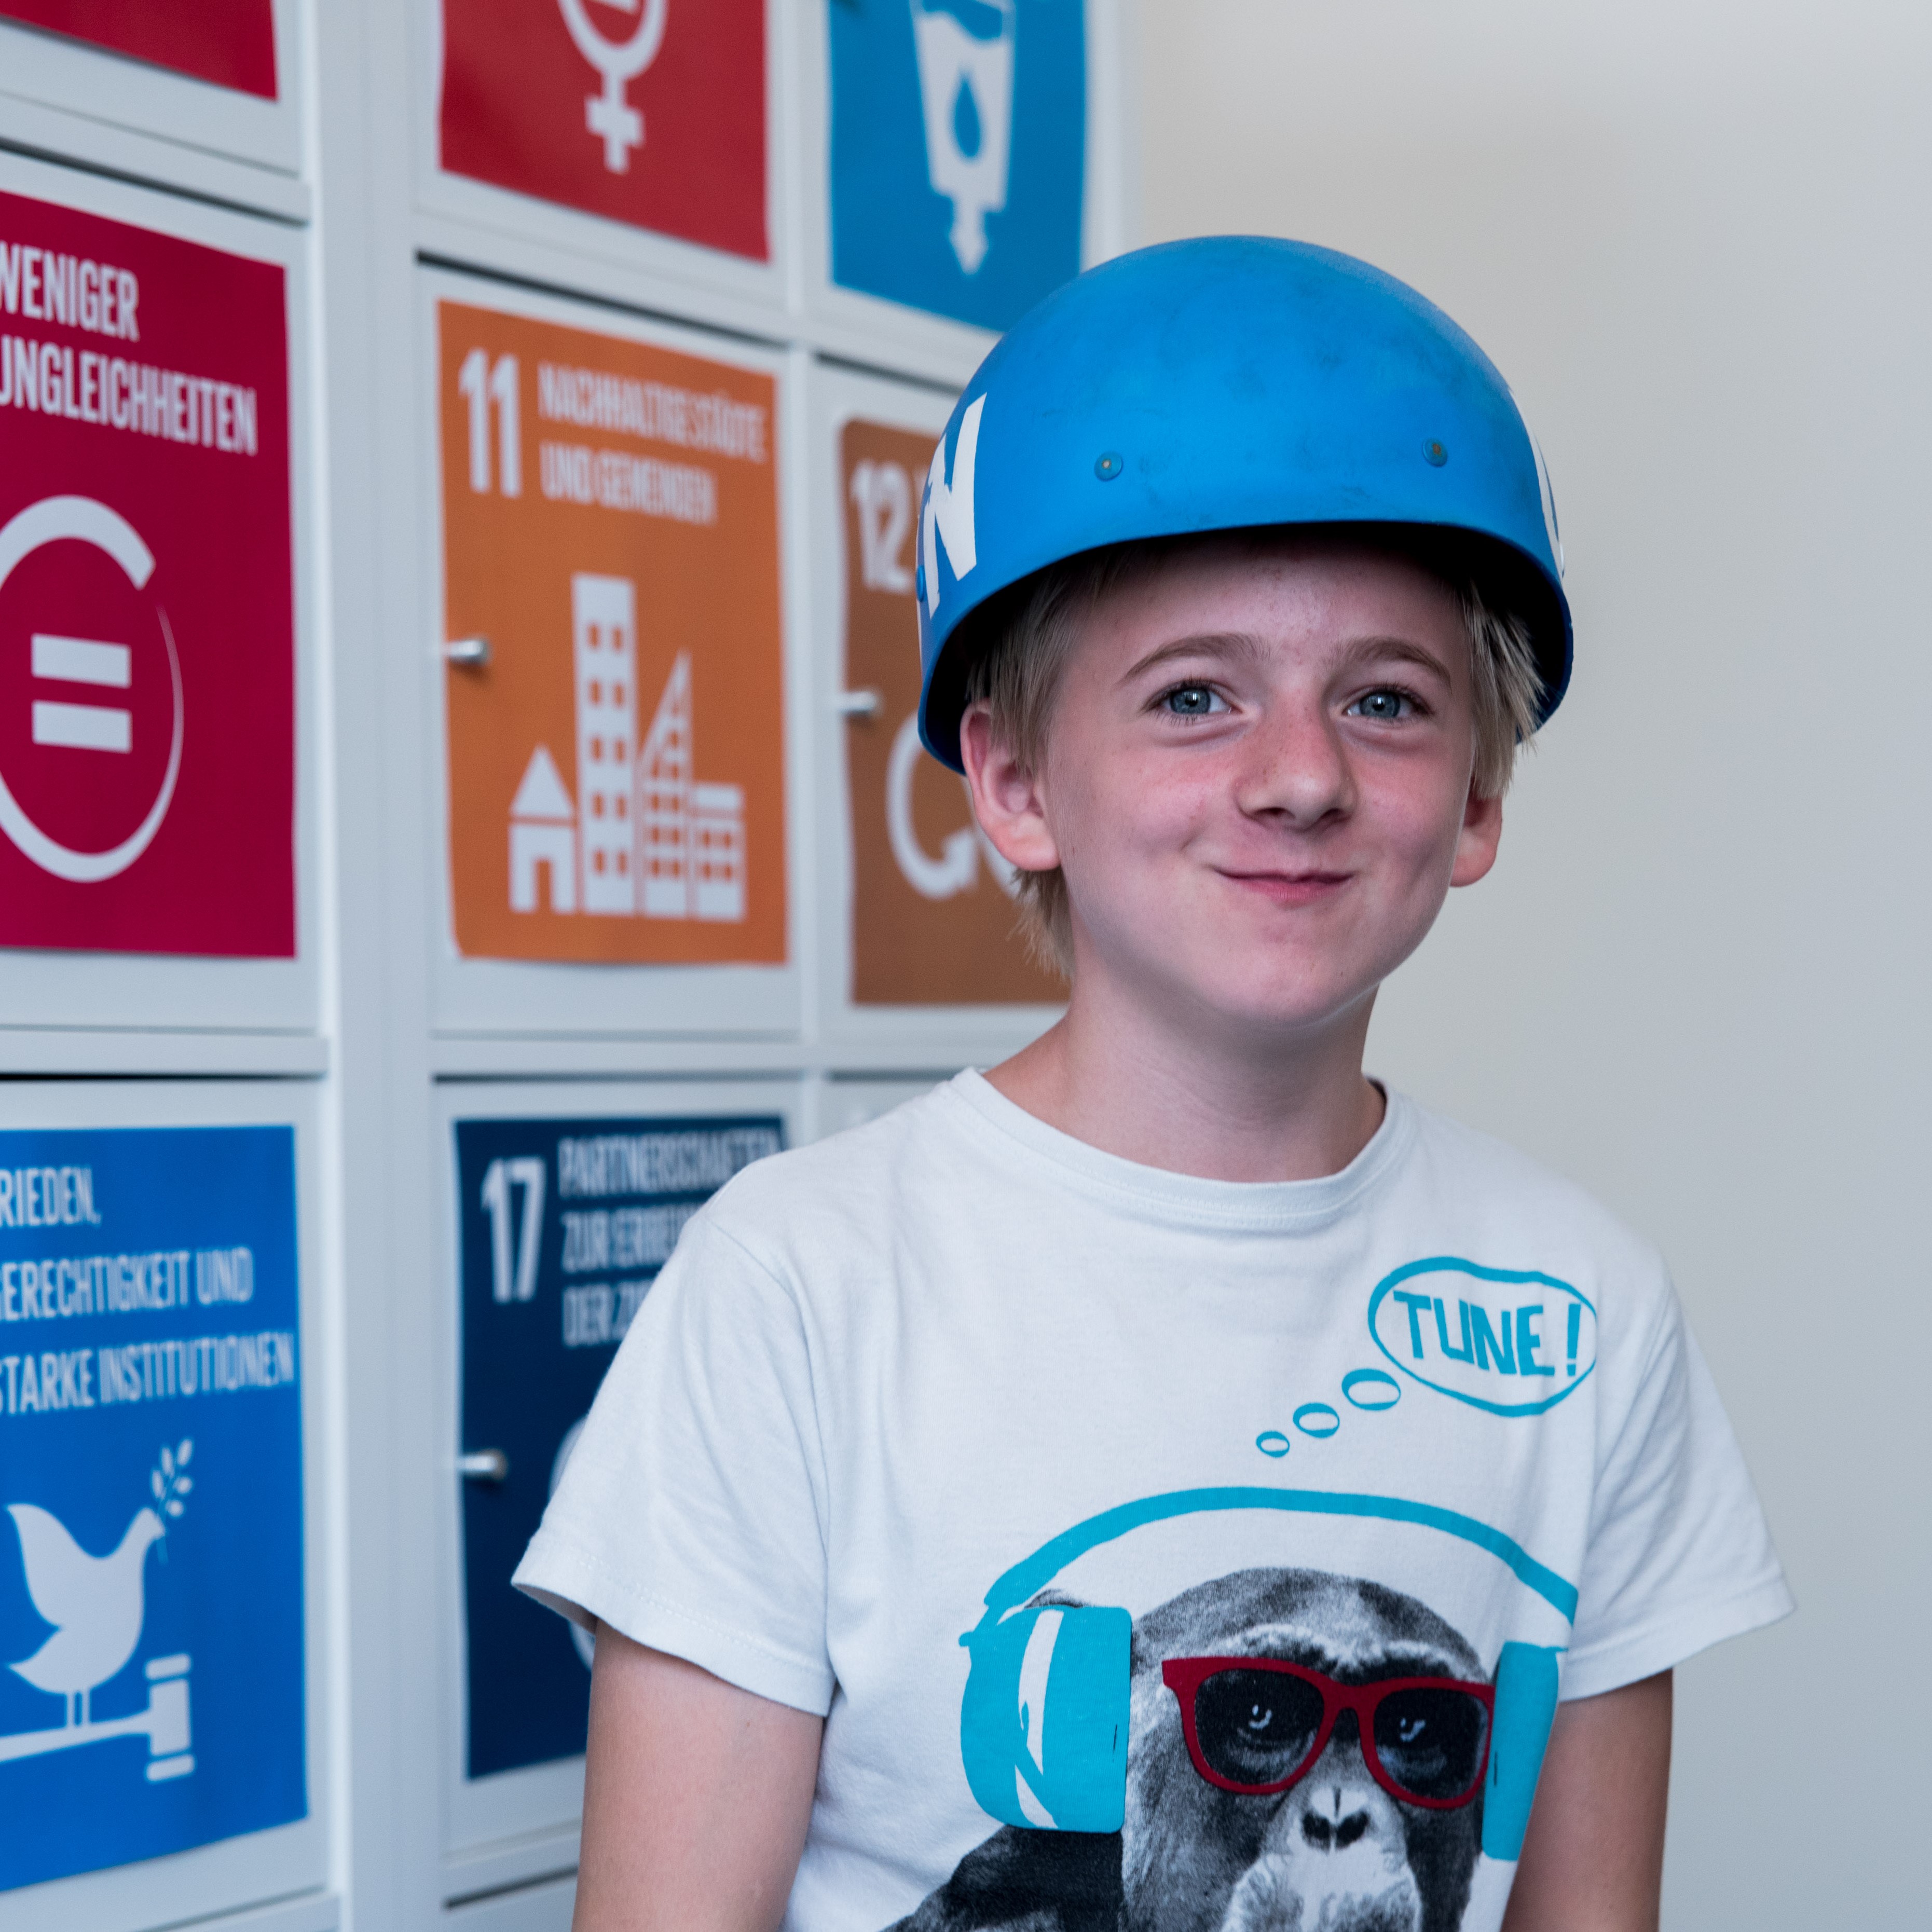 Boy posing with "blue helmet"